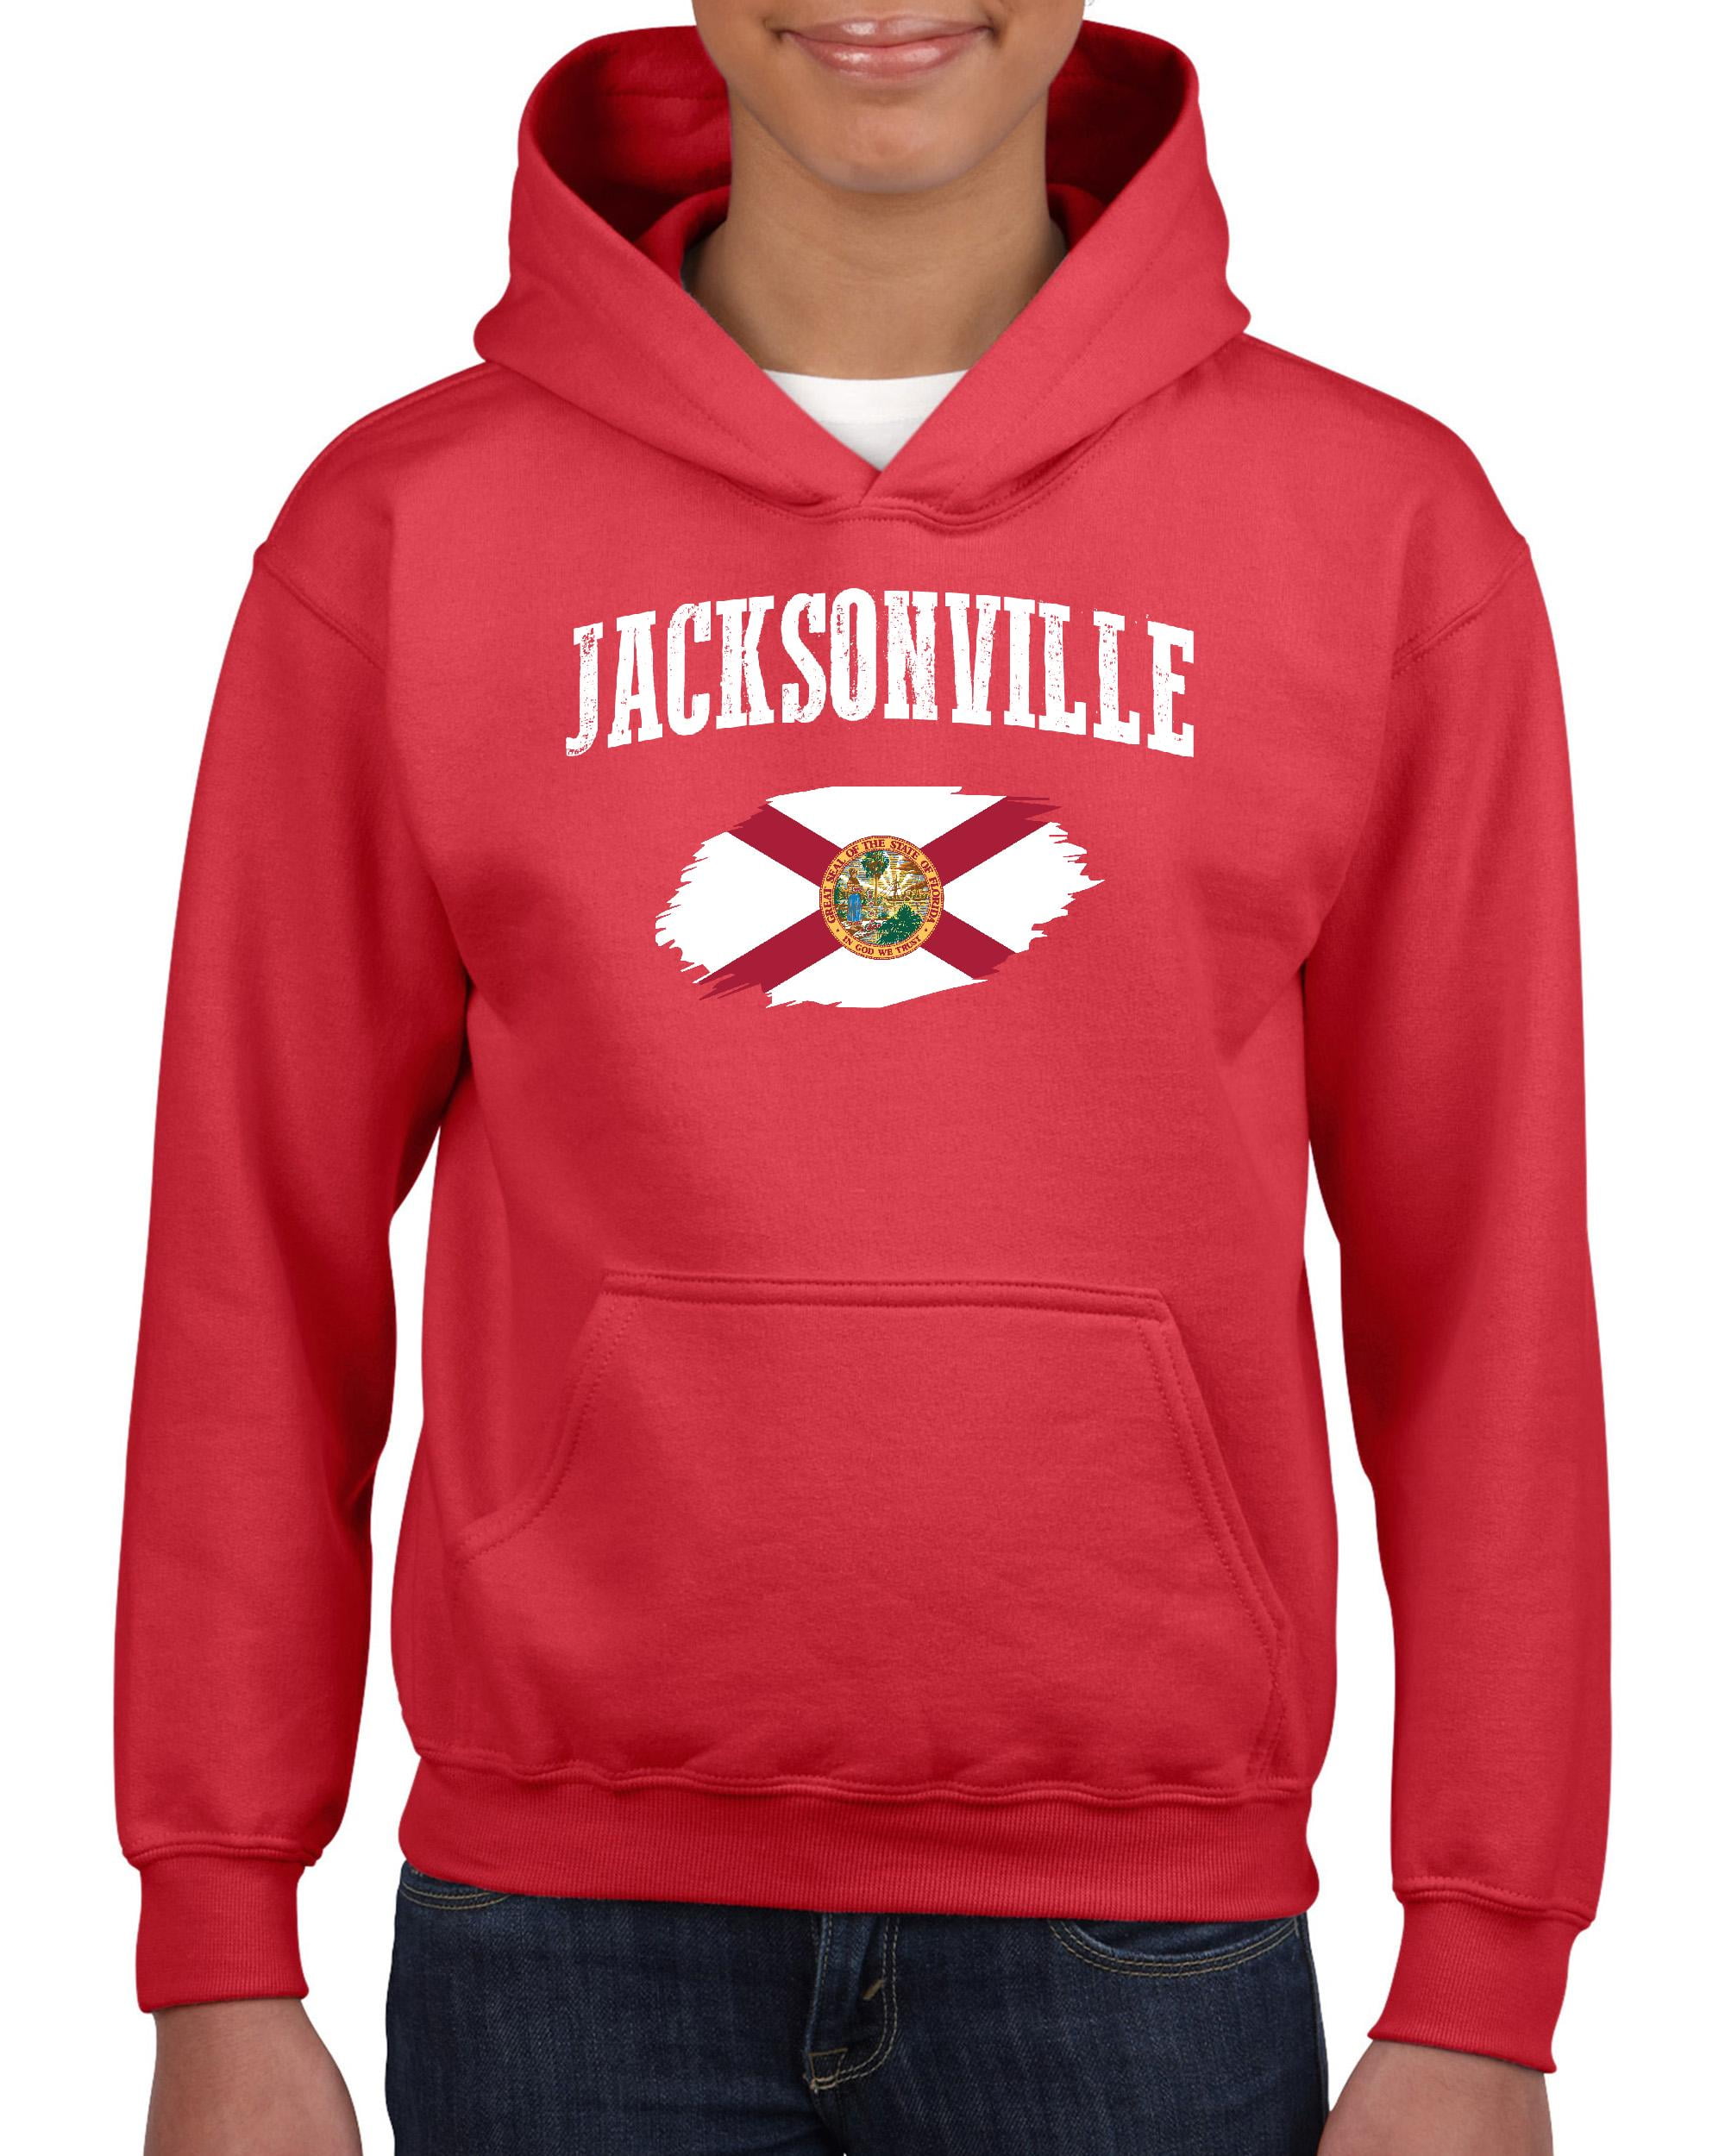 Big Girls Hoodies and Sweatshirts - Jacksonville - Walmart.com